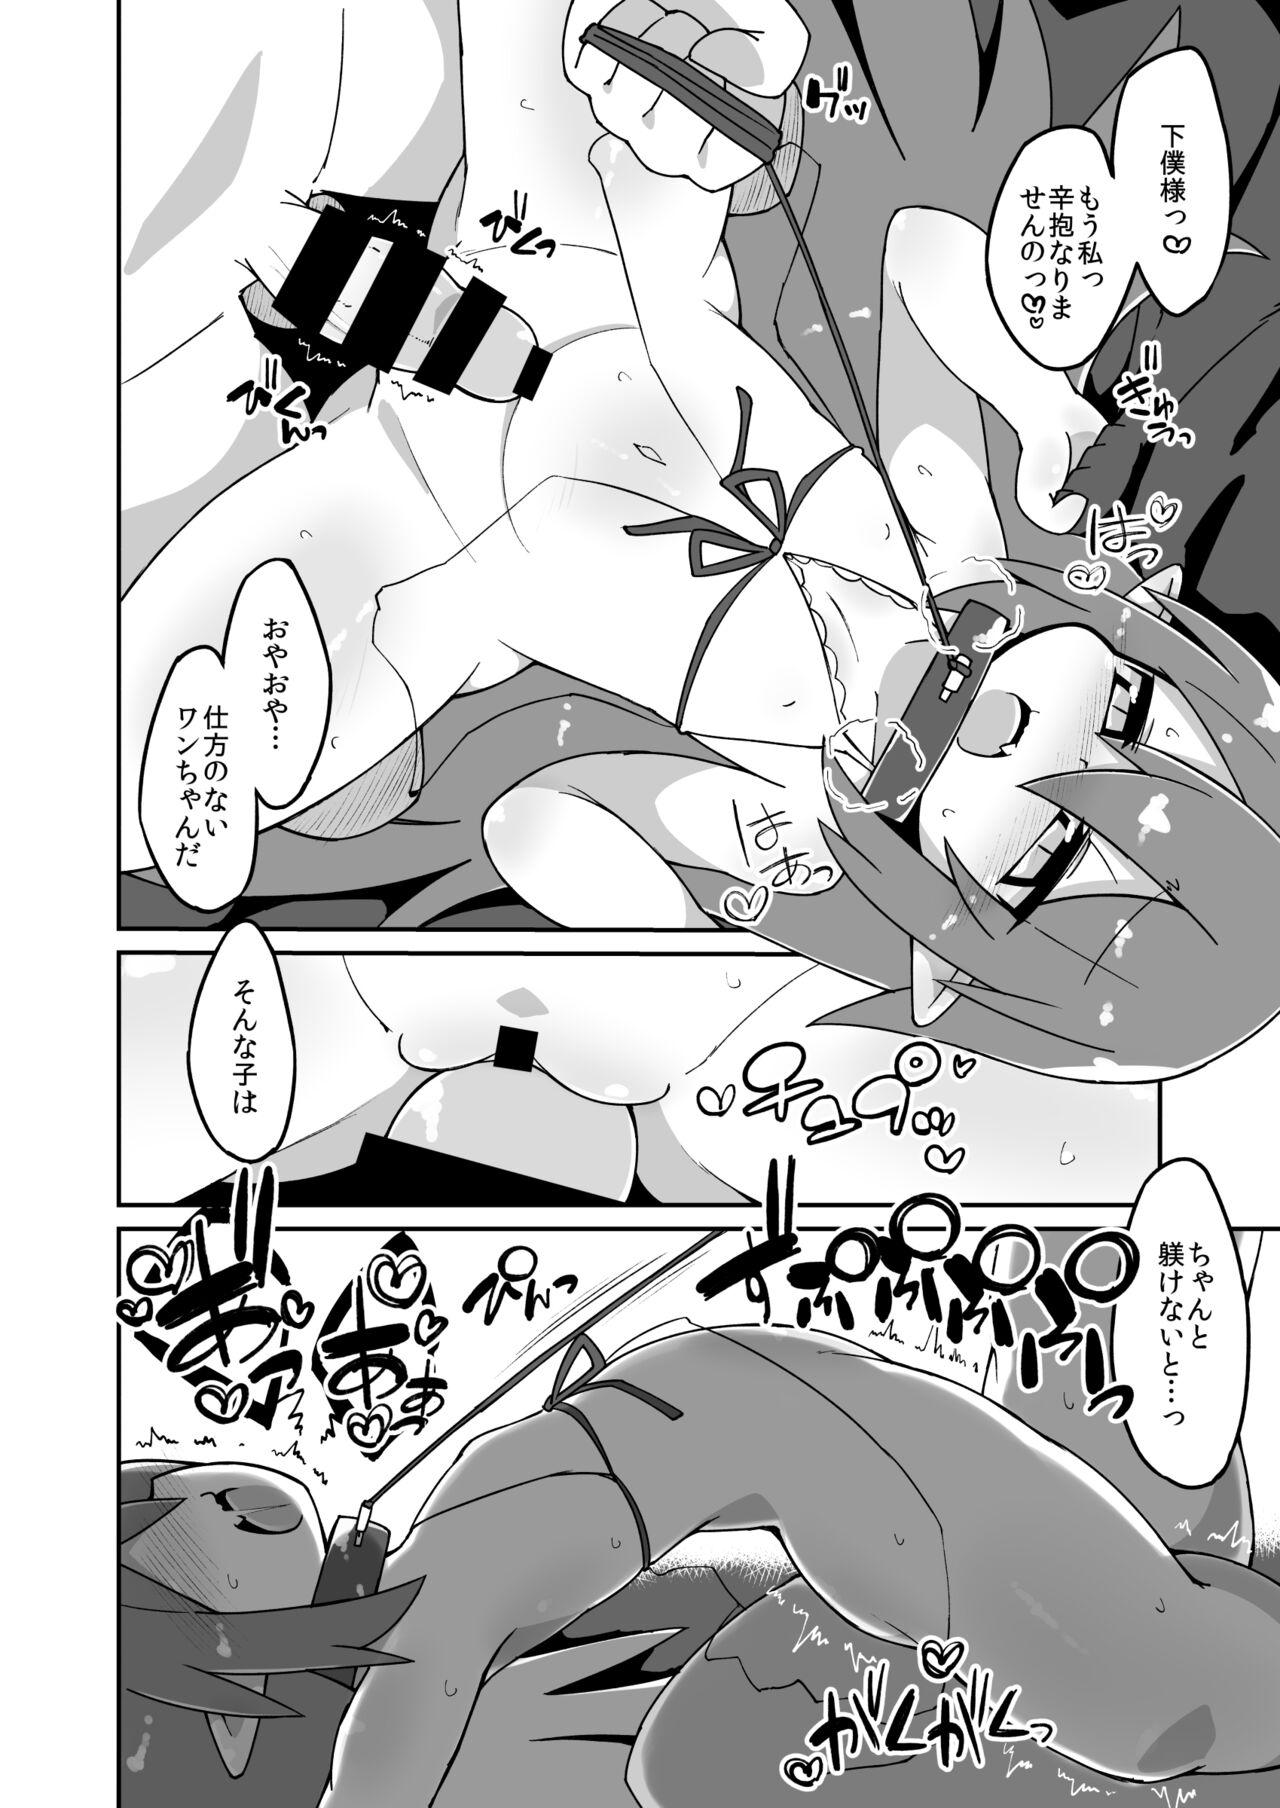 Dyke Aqua Ecchi Manga - Bomber girl Sloppy Blow Job - Picture 2